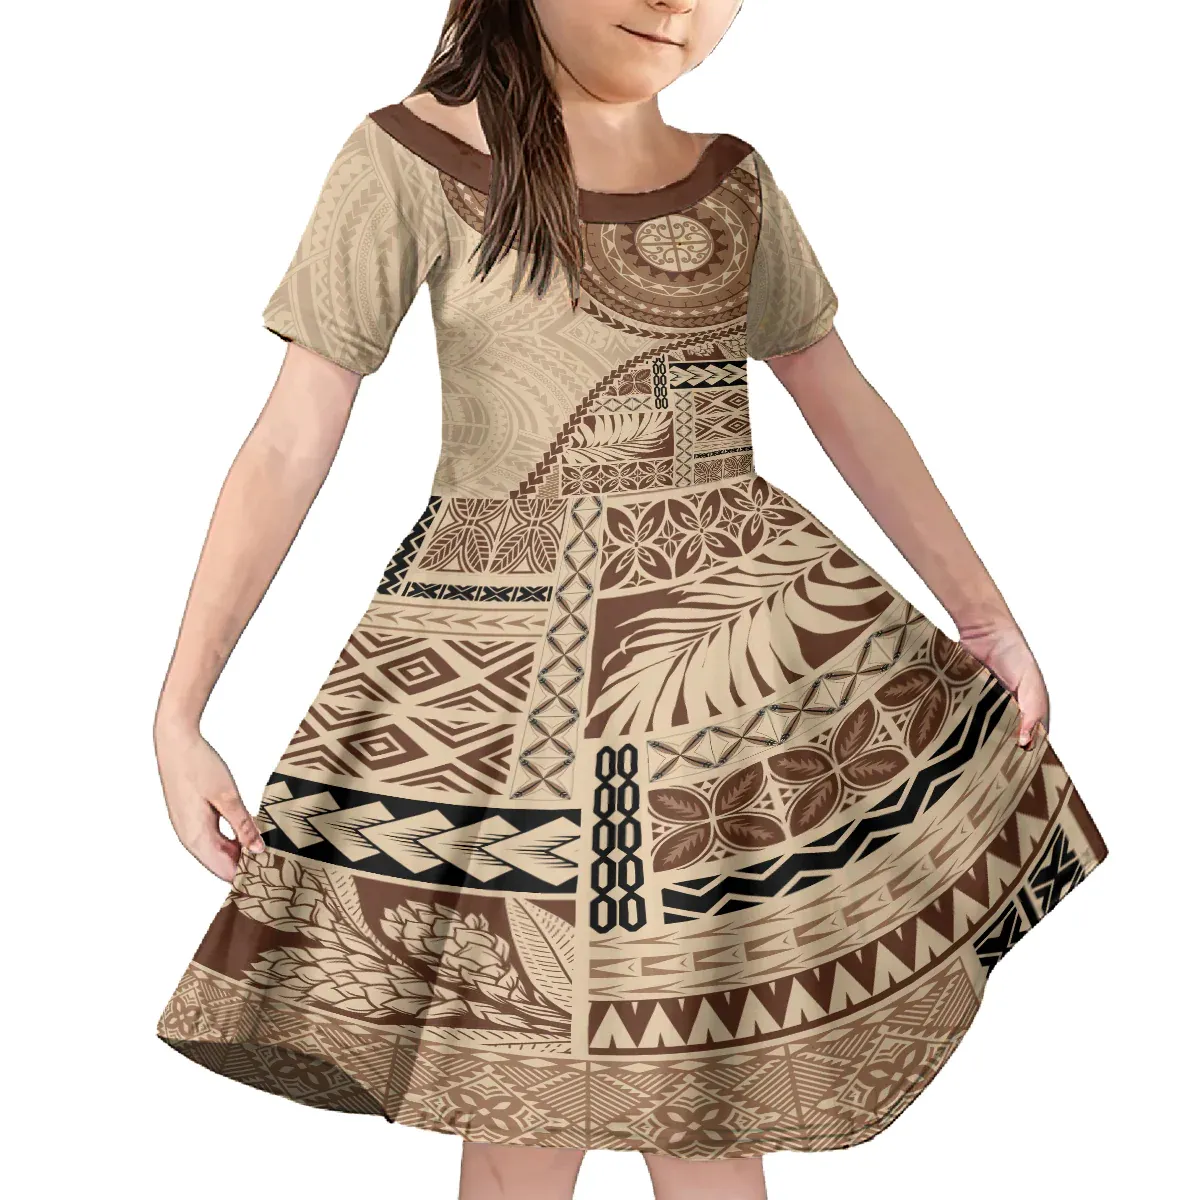 Gaun lengan pendek anak perempuan samoo kustom pola Siapo gaya sederhana gaun Samoan penjualan terbaik